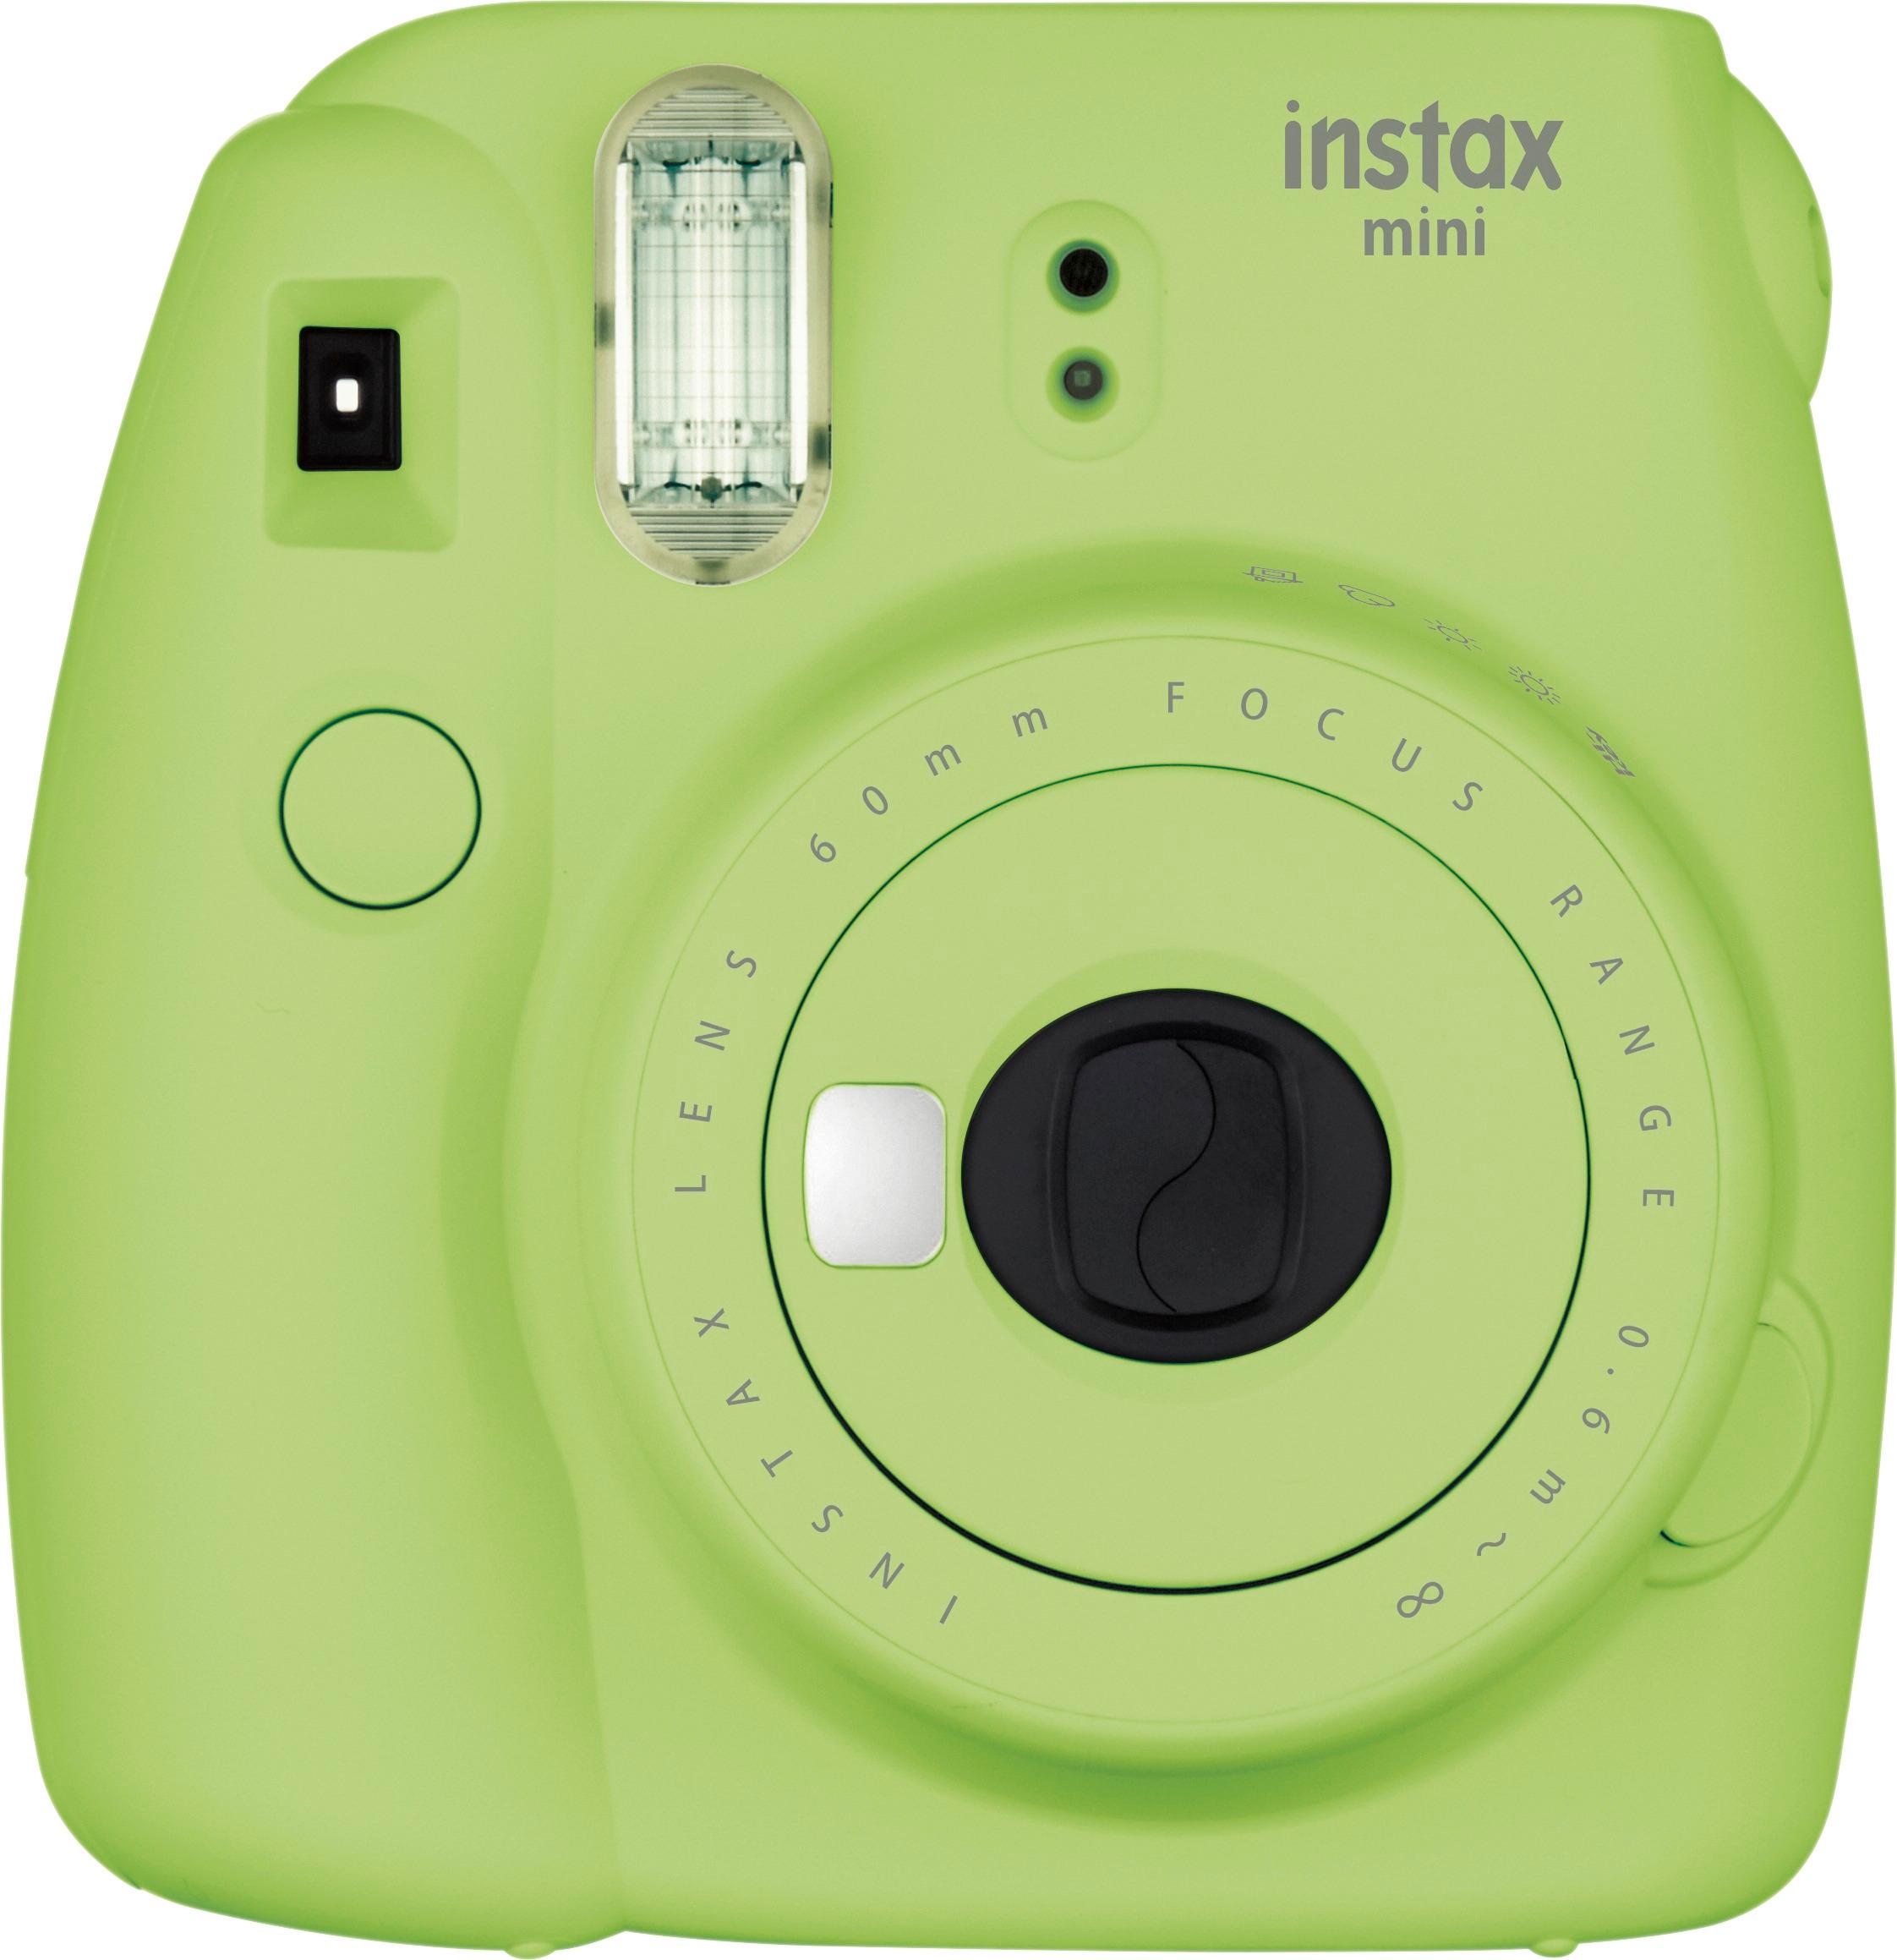 UPC 074101033120 product image for Fujifilm - instax mini 9 Instant Film Camera - Lime Green | upcitemdb.com